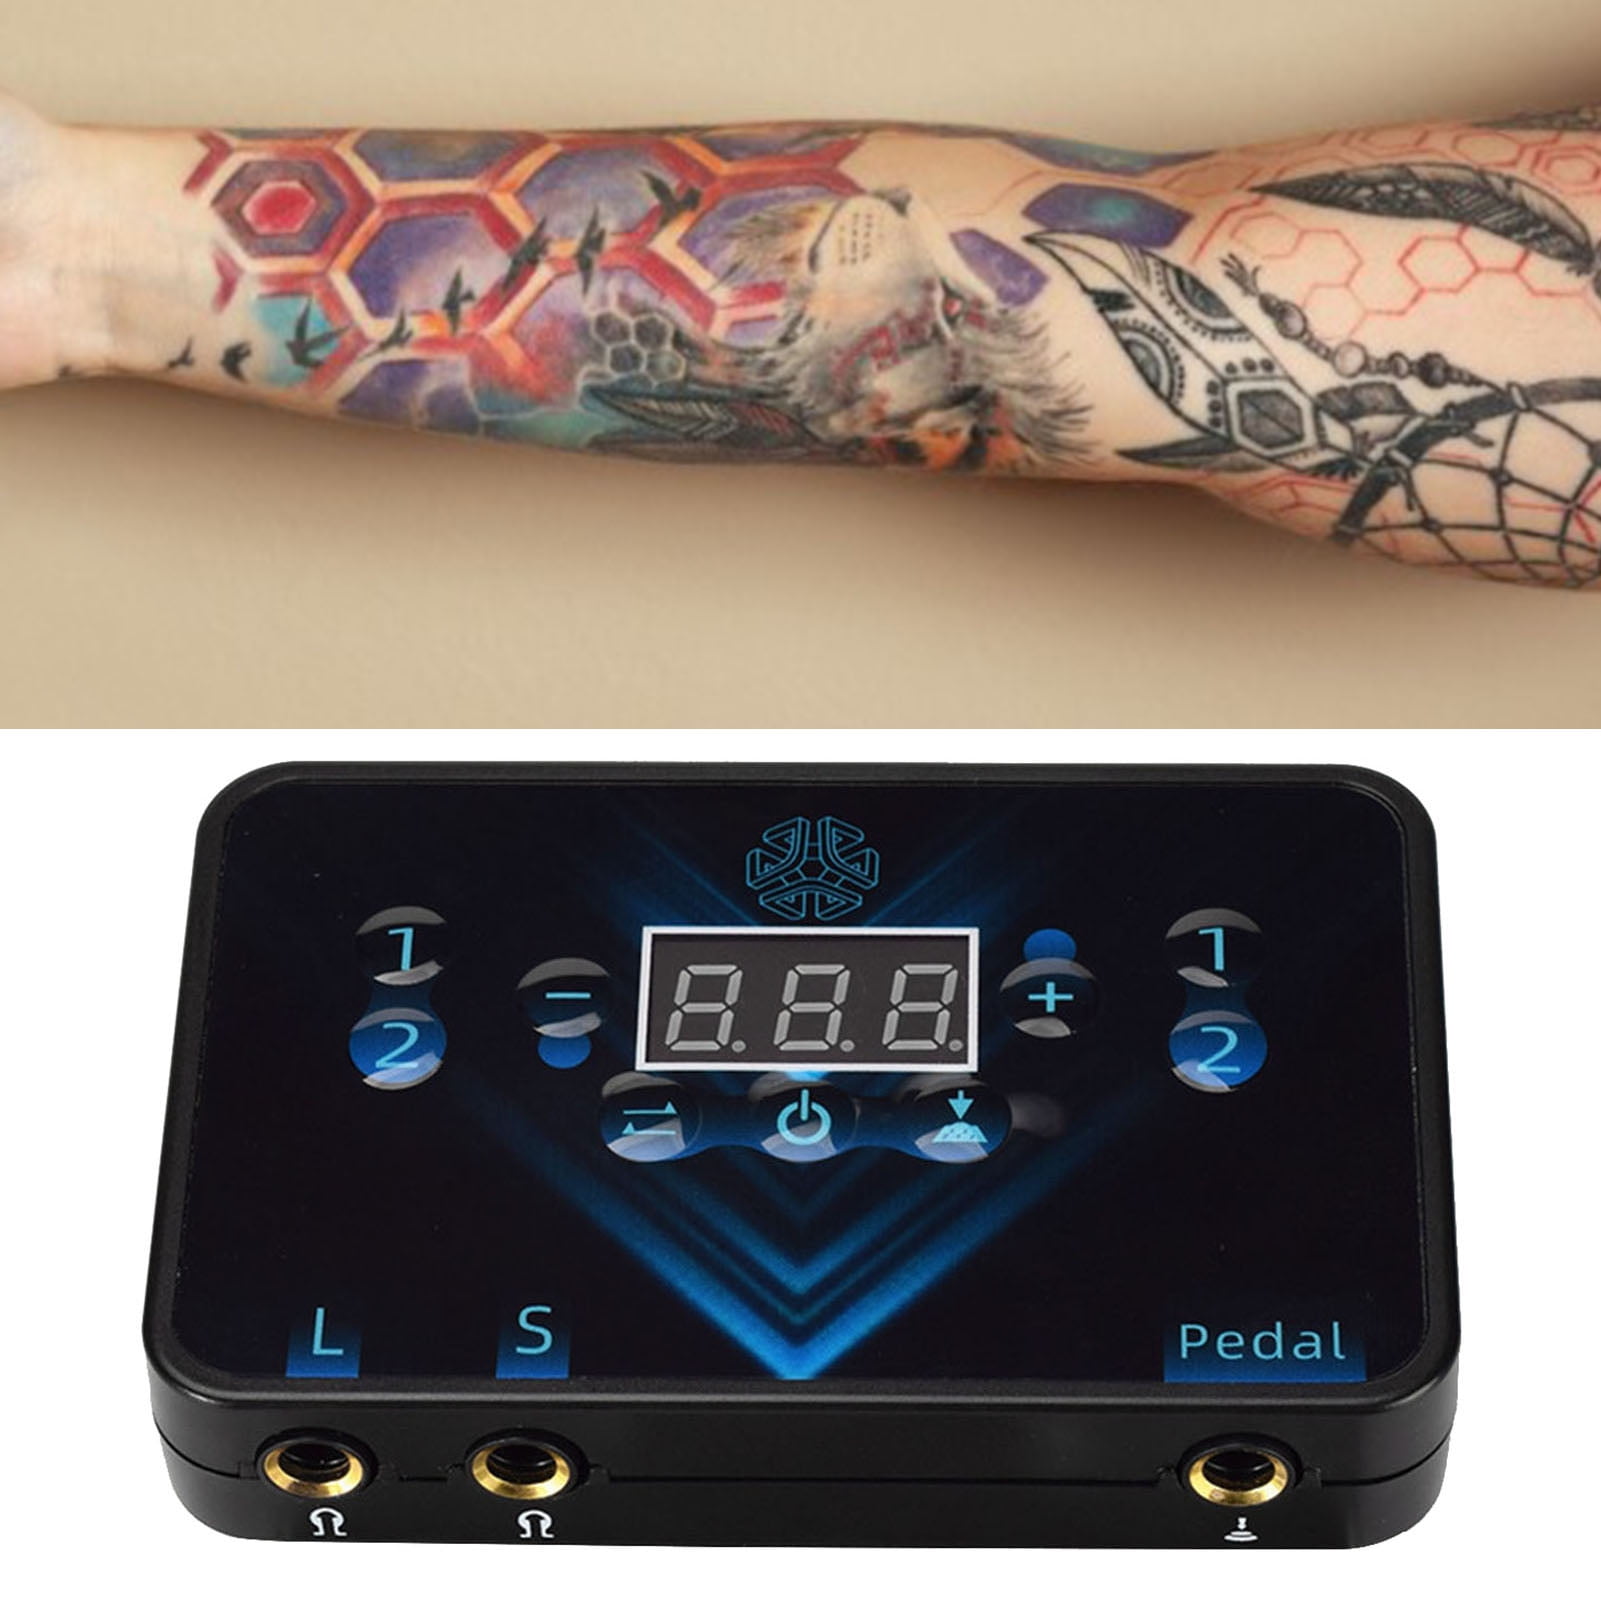 Tattoo Accessories Tattoo Power Supplies 3 Hole Dual Mode Tattoos